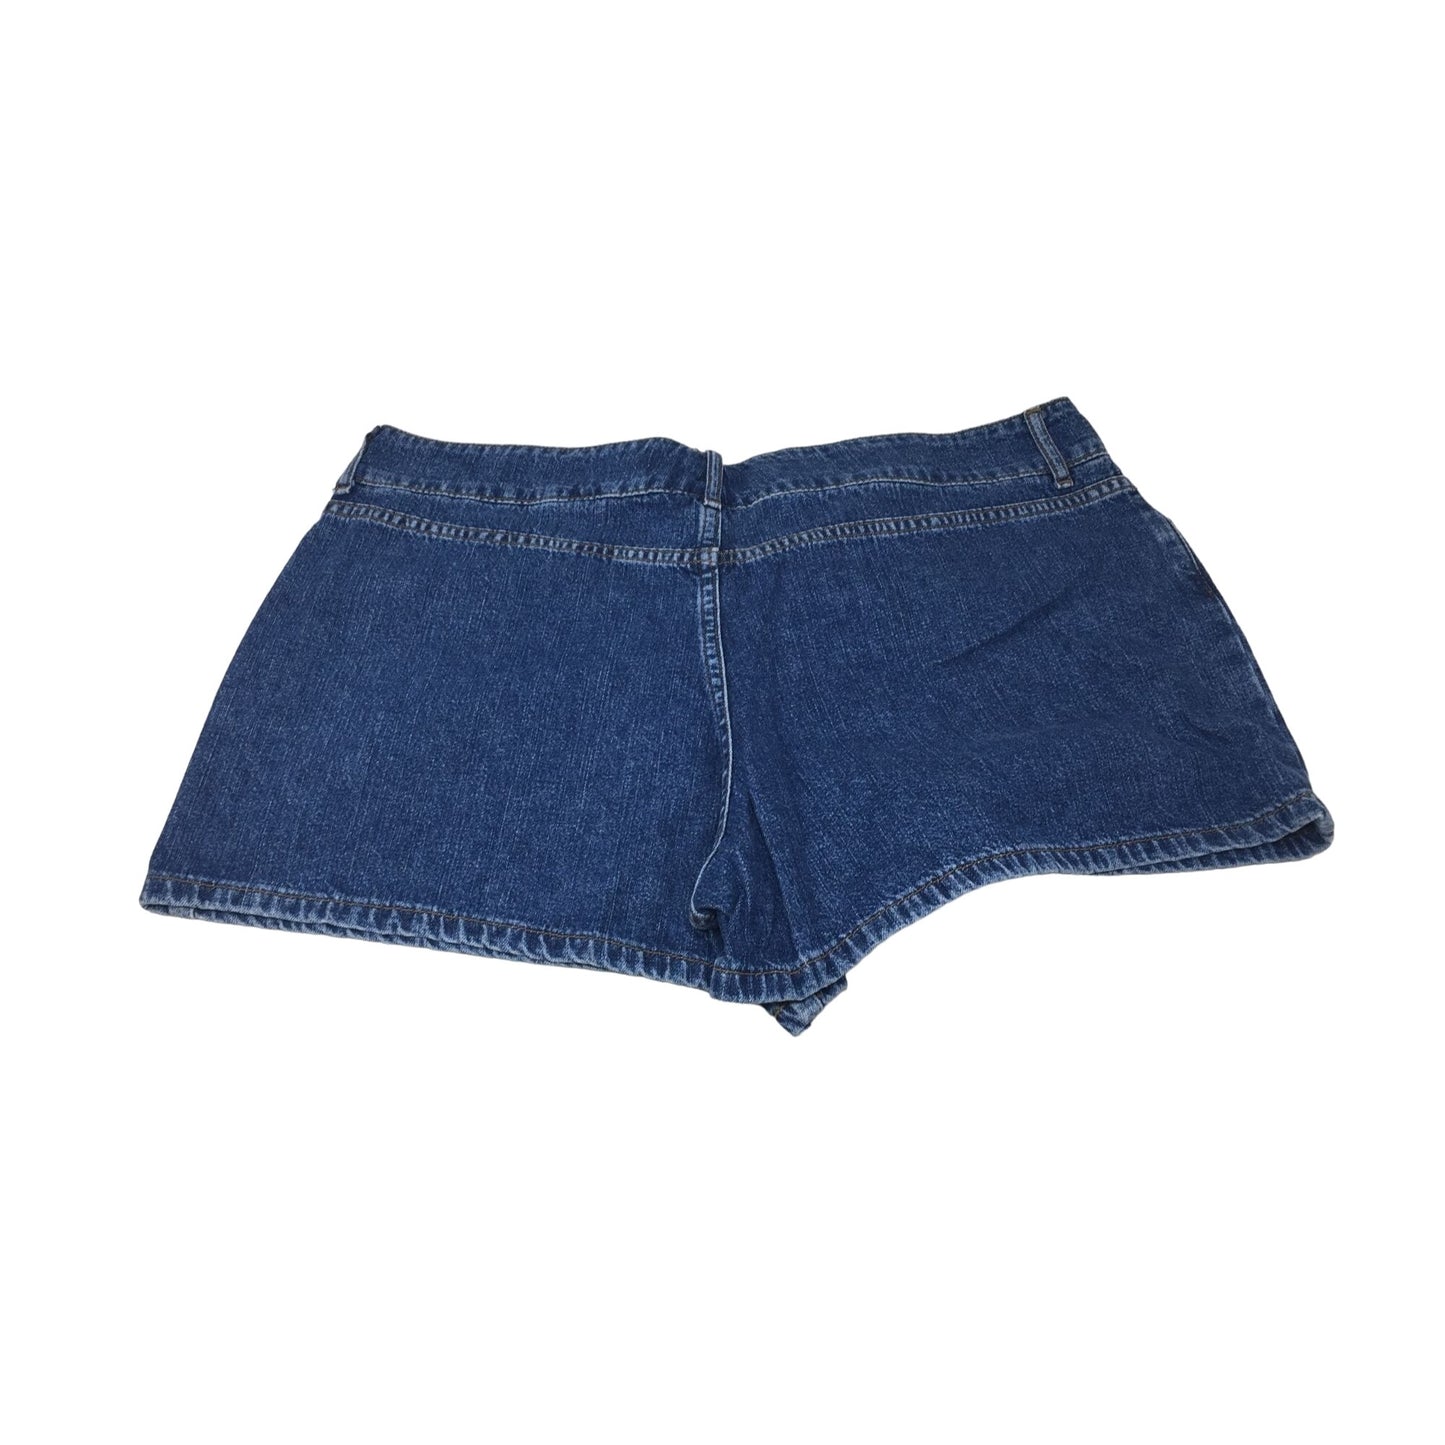 Paris Blues Blue Denim Shorts Size 15 New with Tags